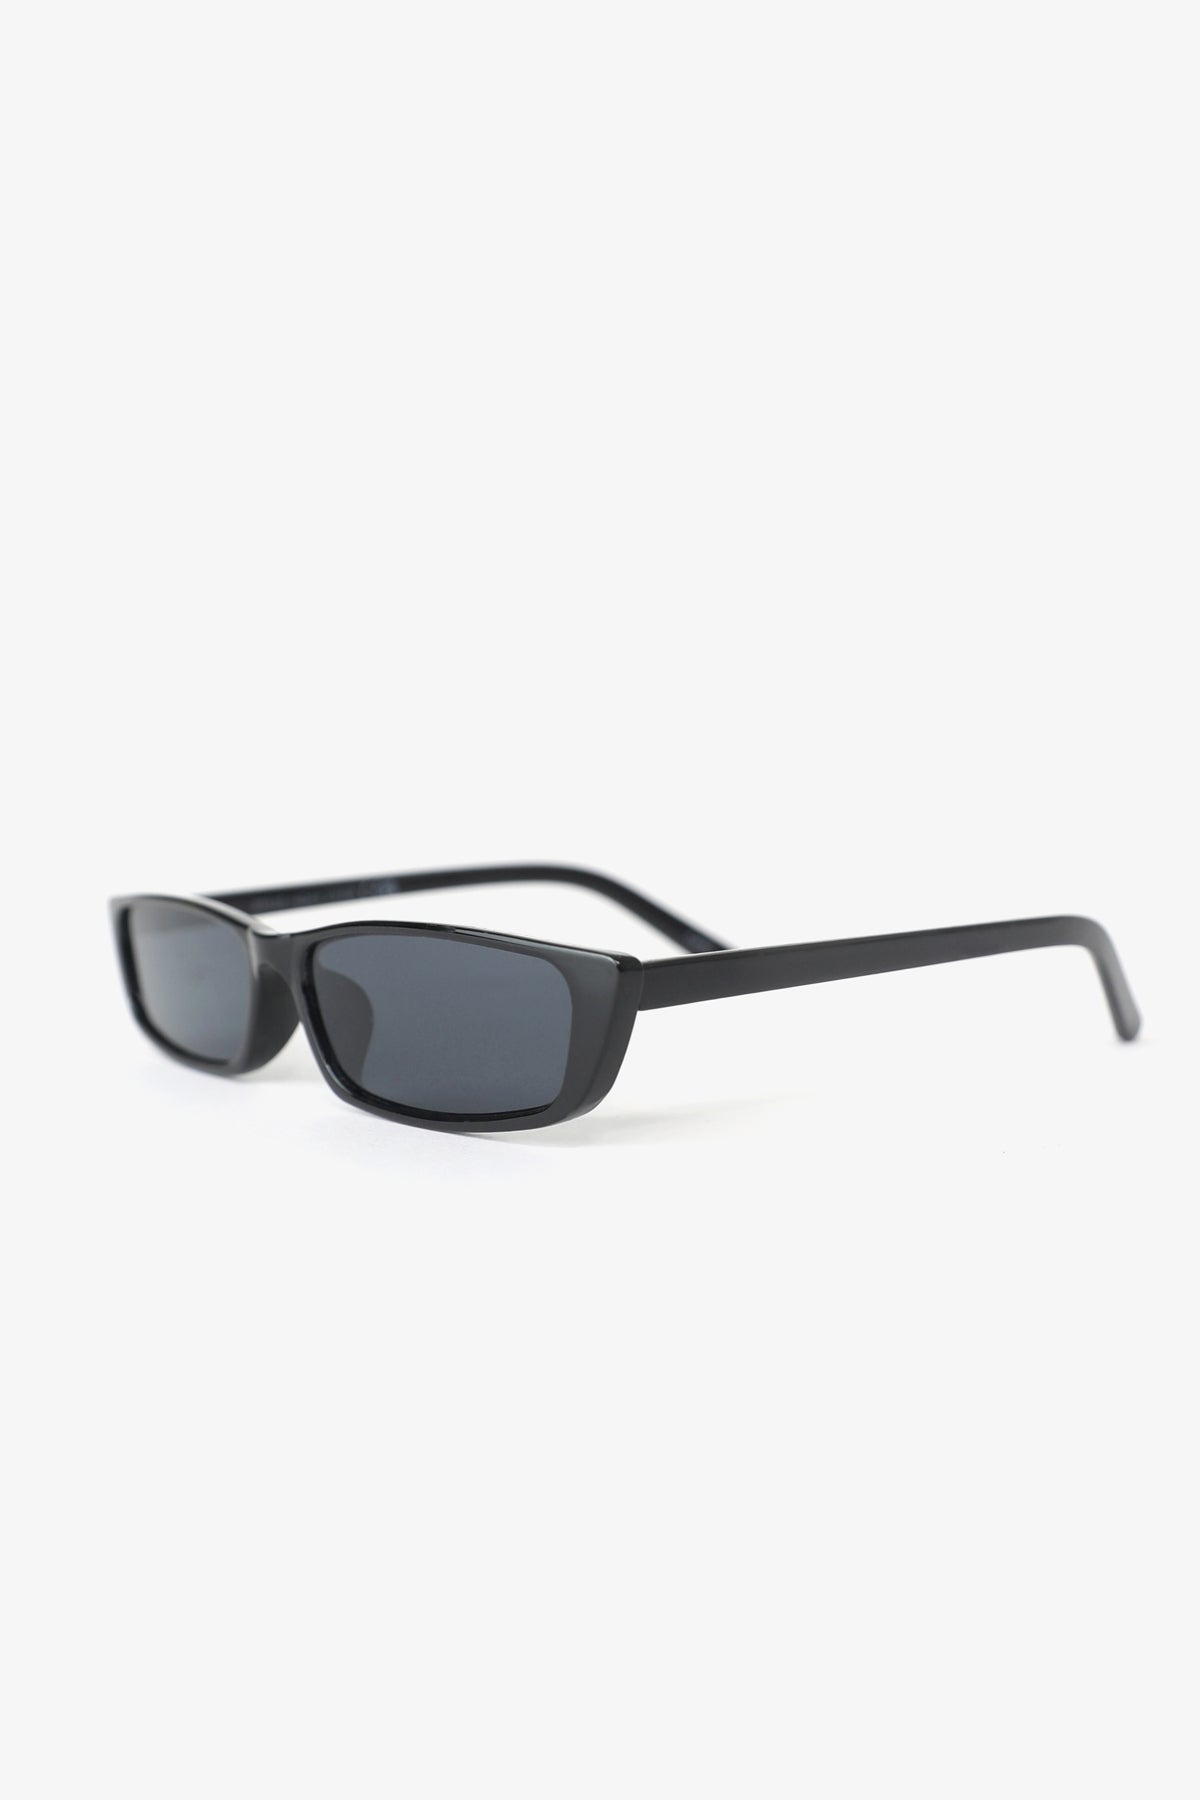 Buy QUIRKMALL Hexagonal Polarized Sunglasses Men Women Geometric Square  Small Vintage Metal Frame Retro Shade Glasses (Black) at Amazon.in